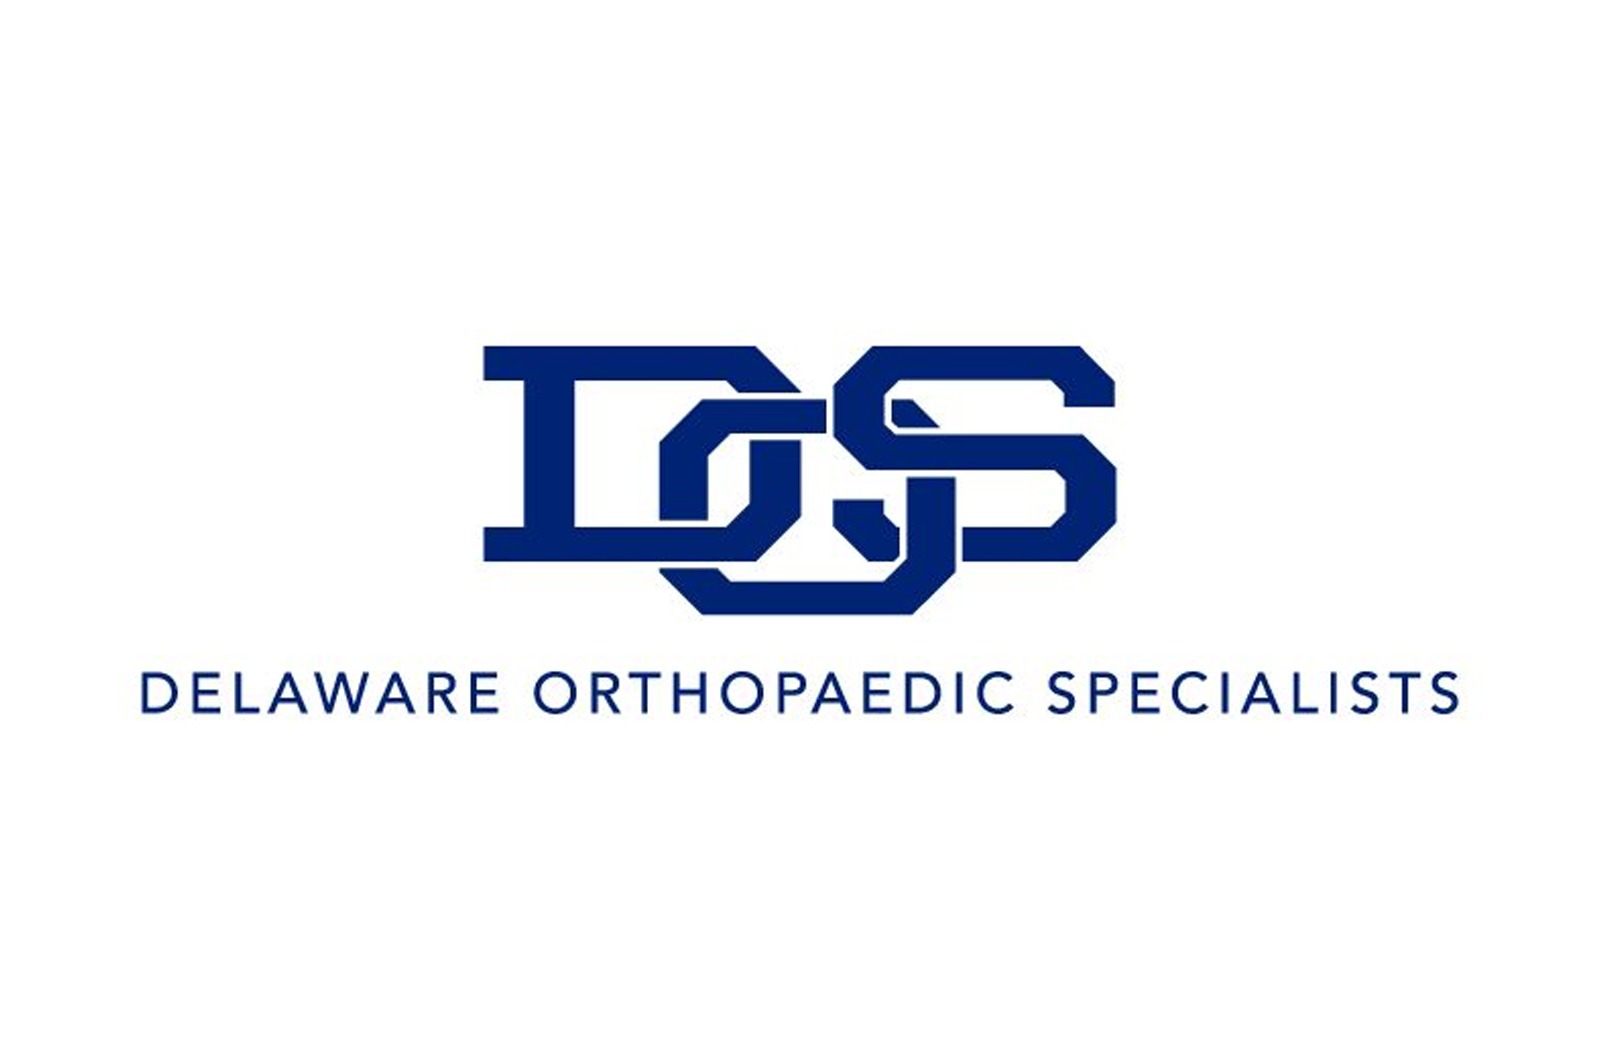 Delaware Orthopaedic Specialists Continue Sponsorship of Delaware FC Hockessin